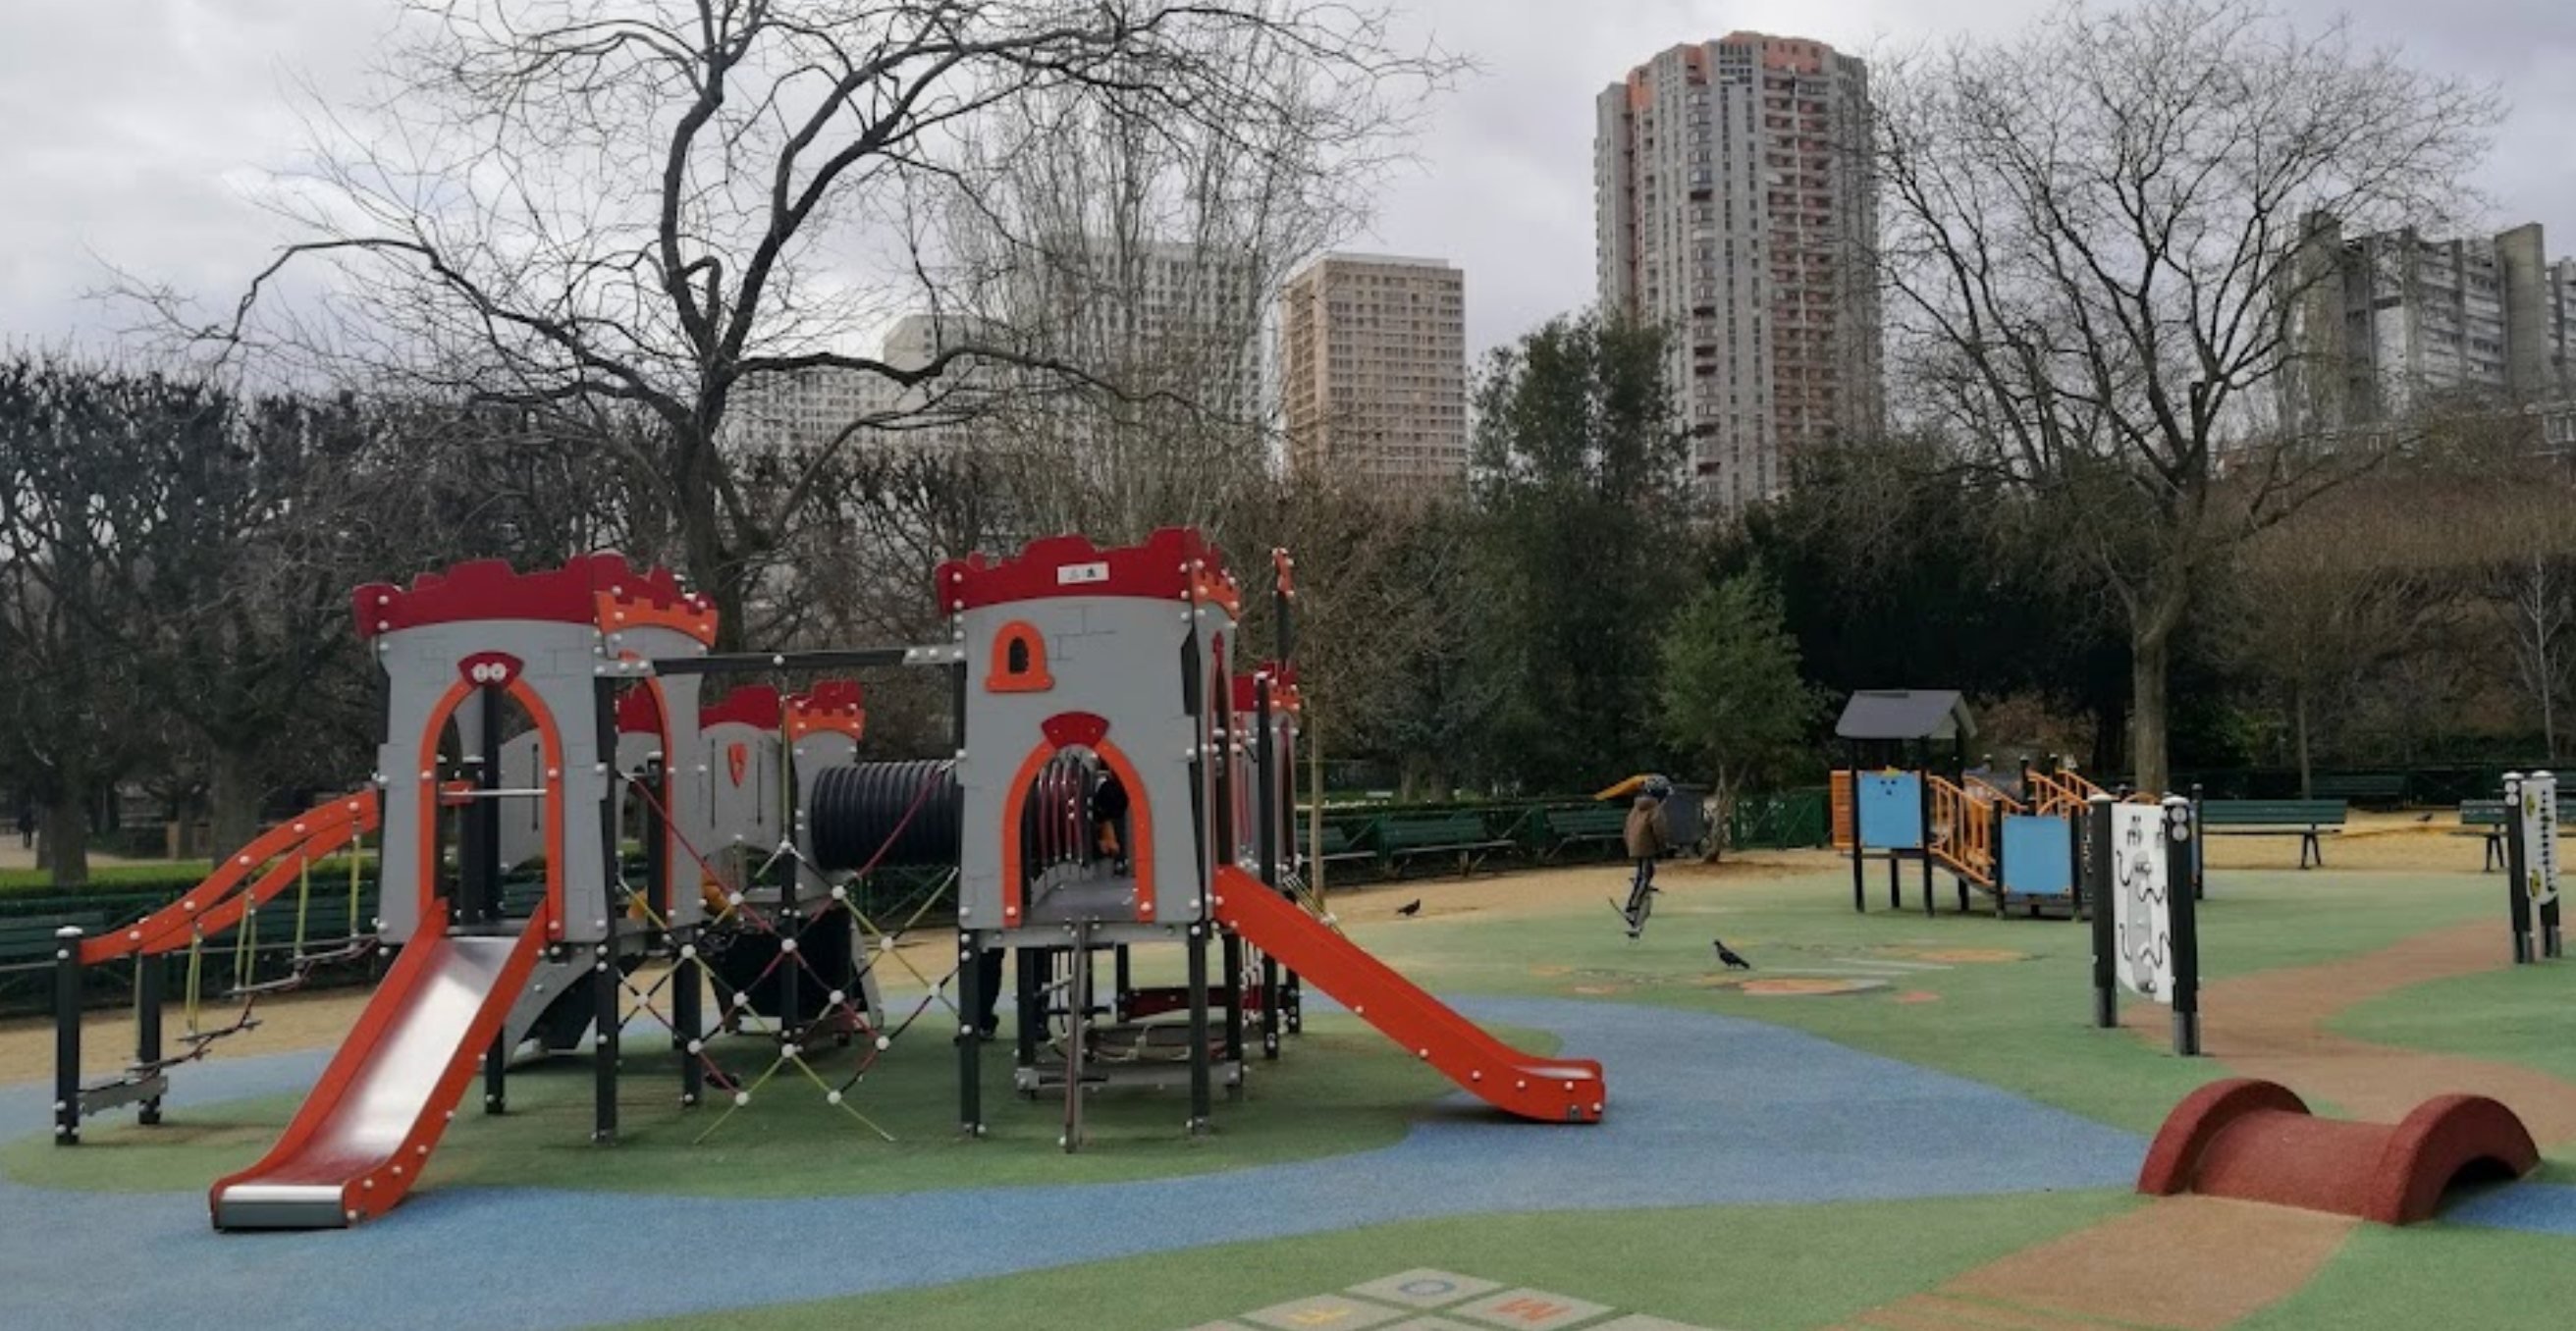 Playground in Parc de Choisy